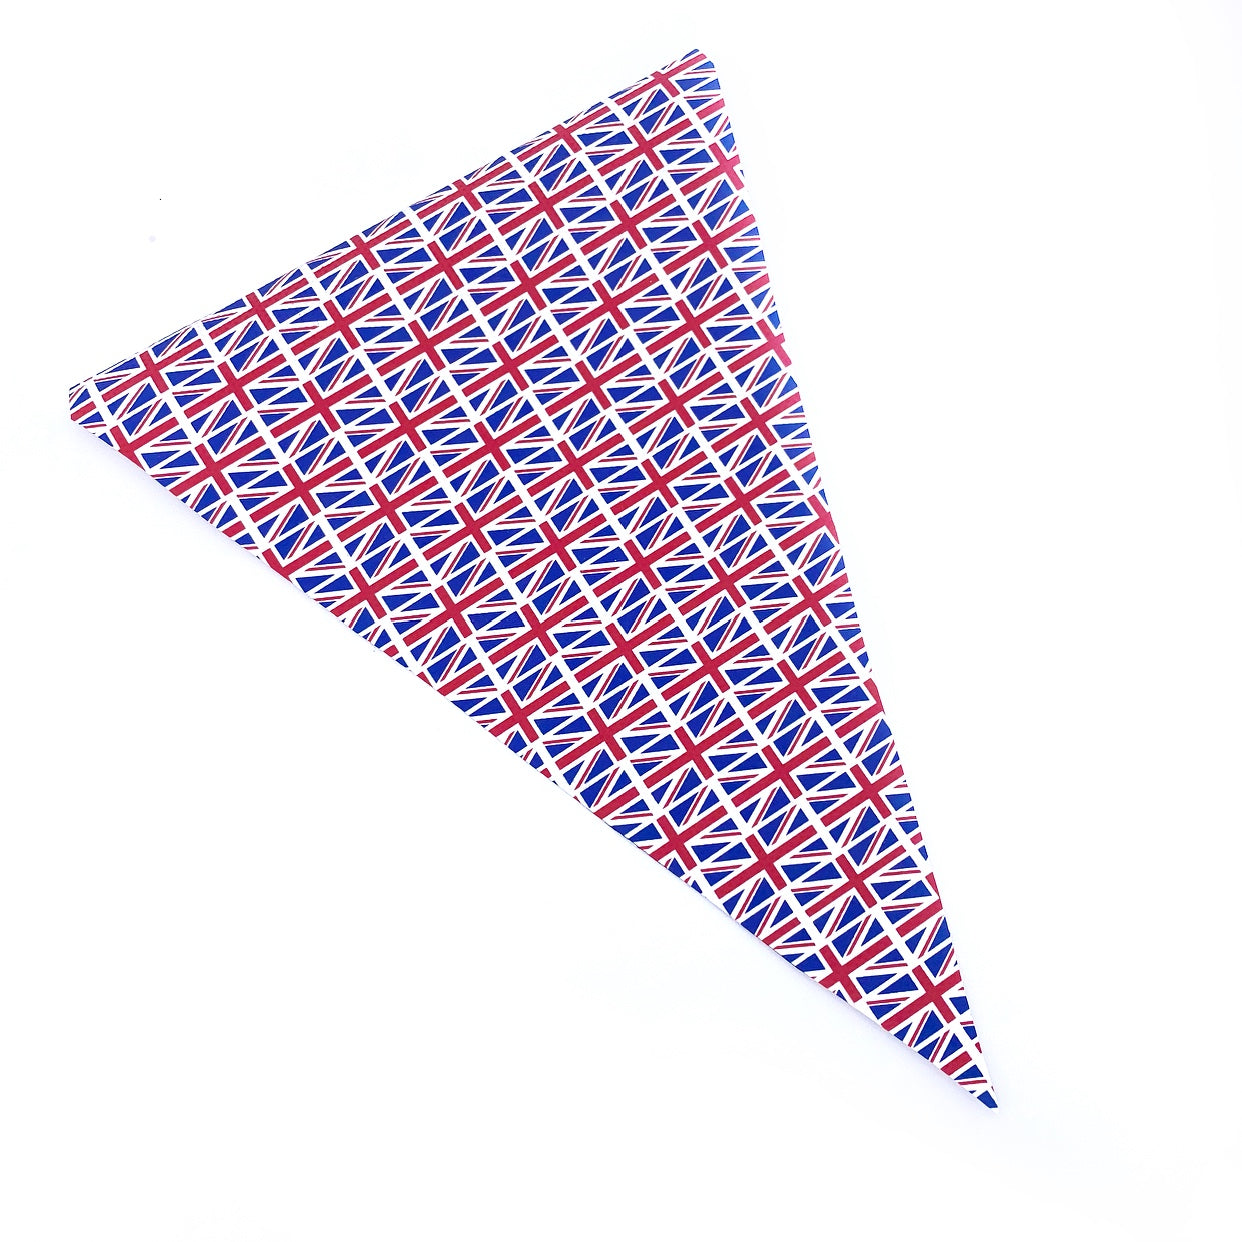 Union Jack Flag/Bunting Vertical Lux Premium Printed Fabric-3 per sheet